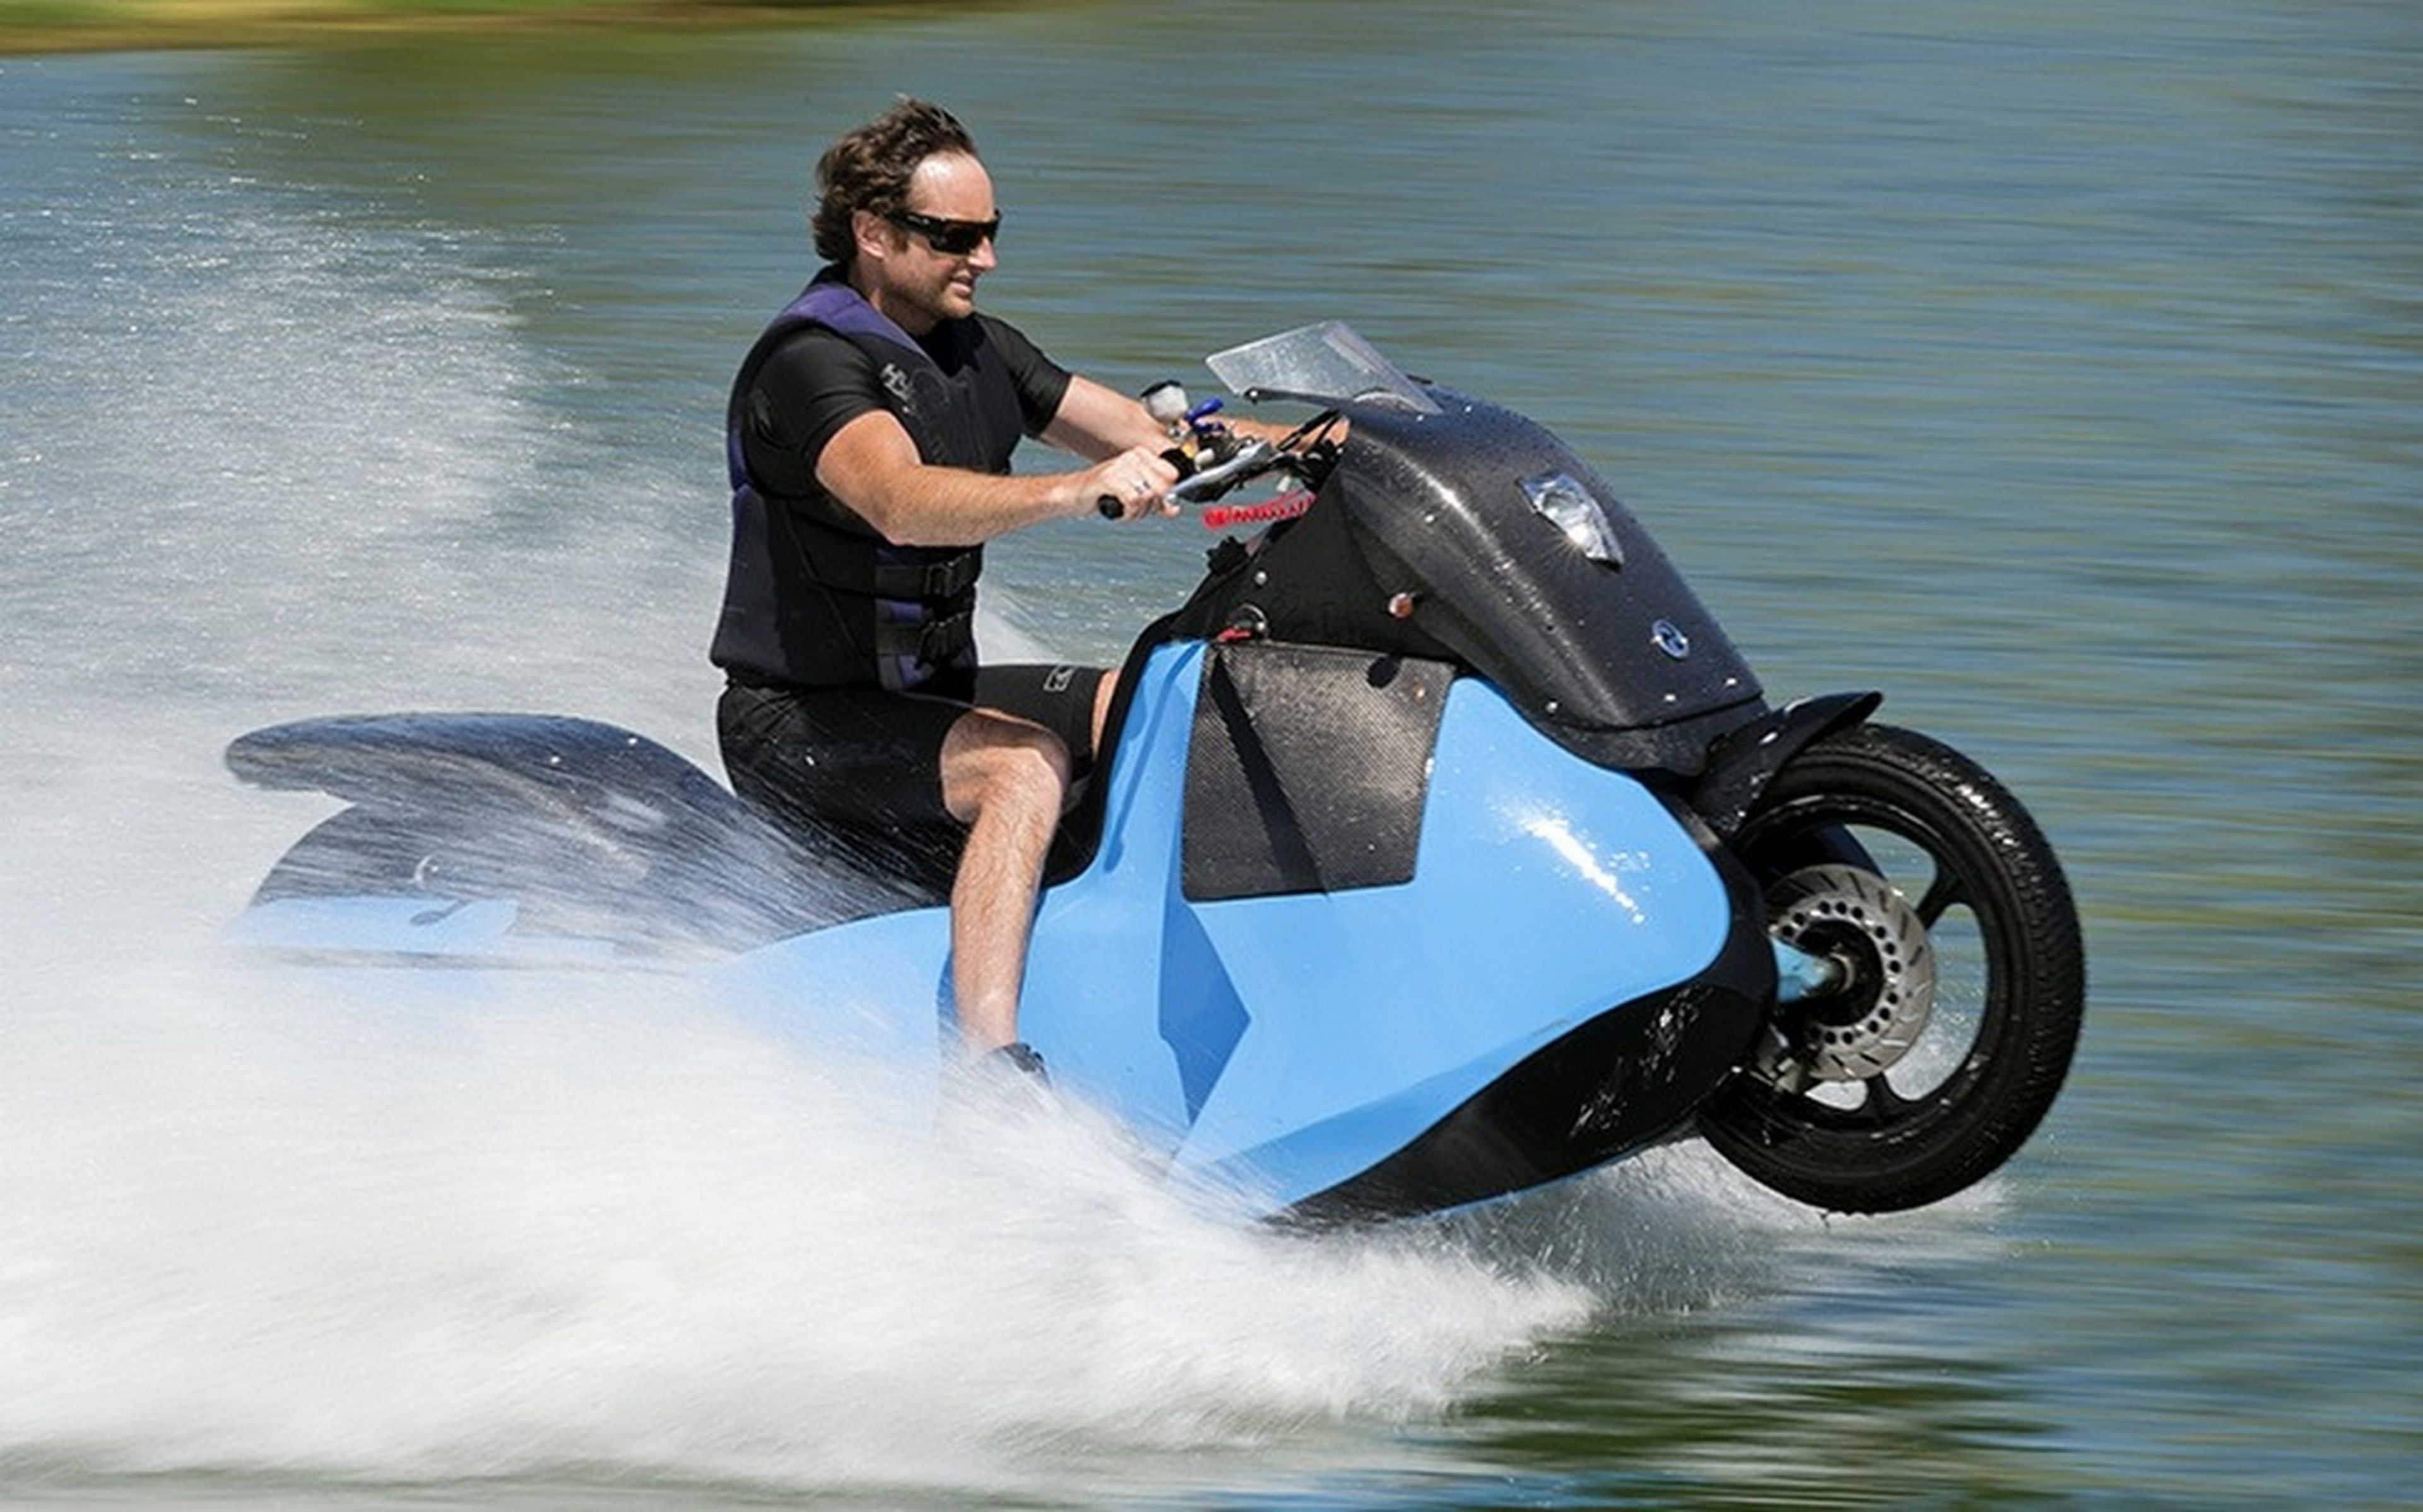 Biski, la moto anfibia para saltar de la carretera al agua sin frenar